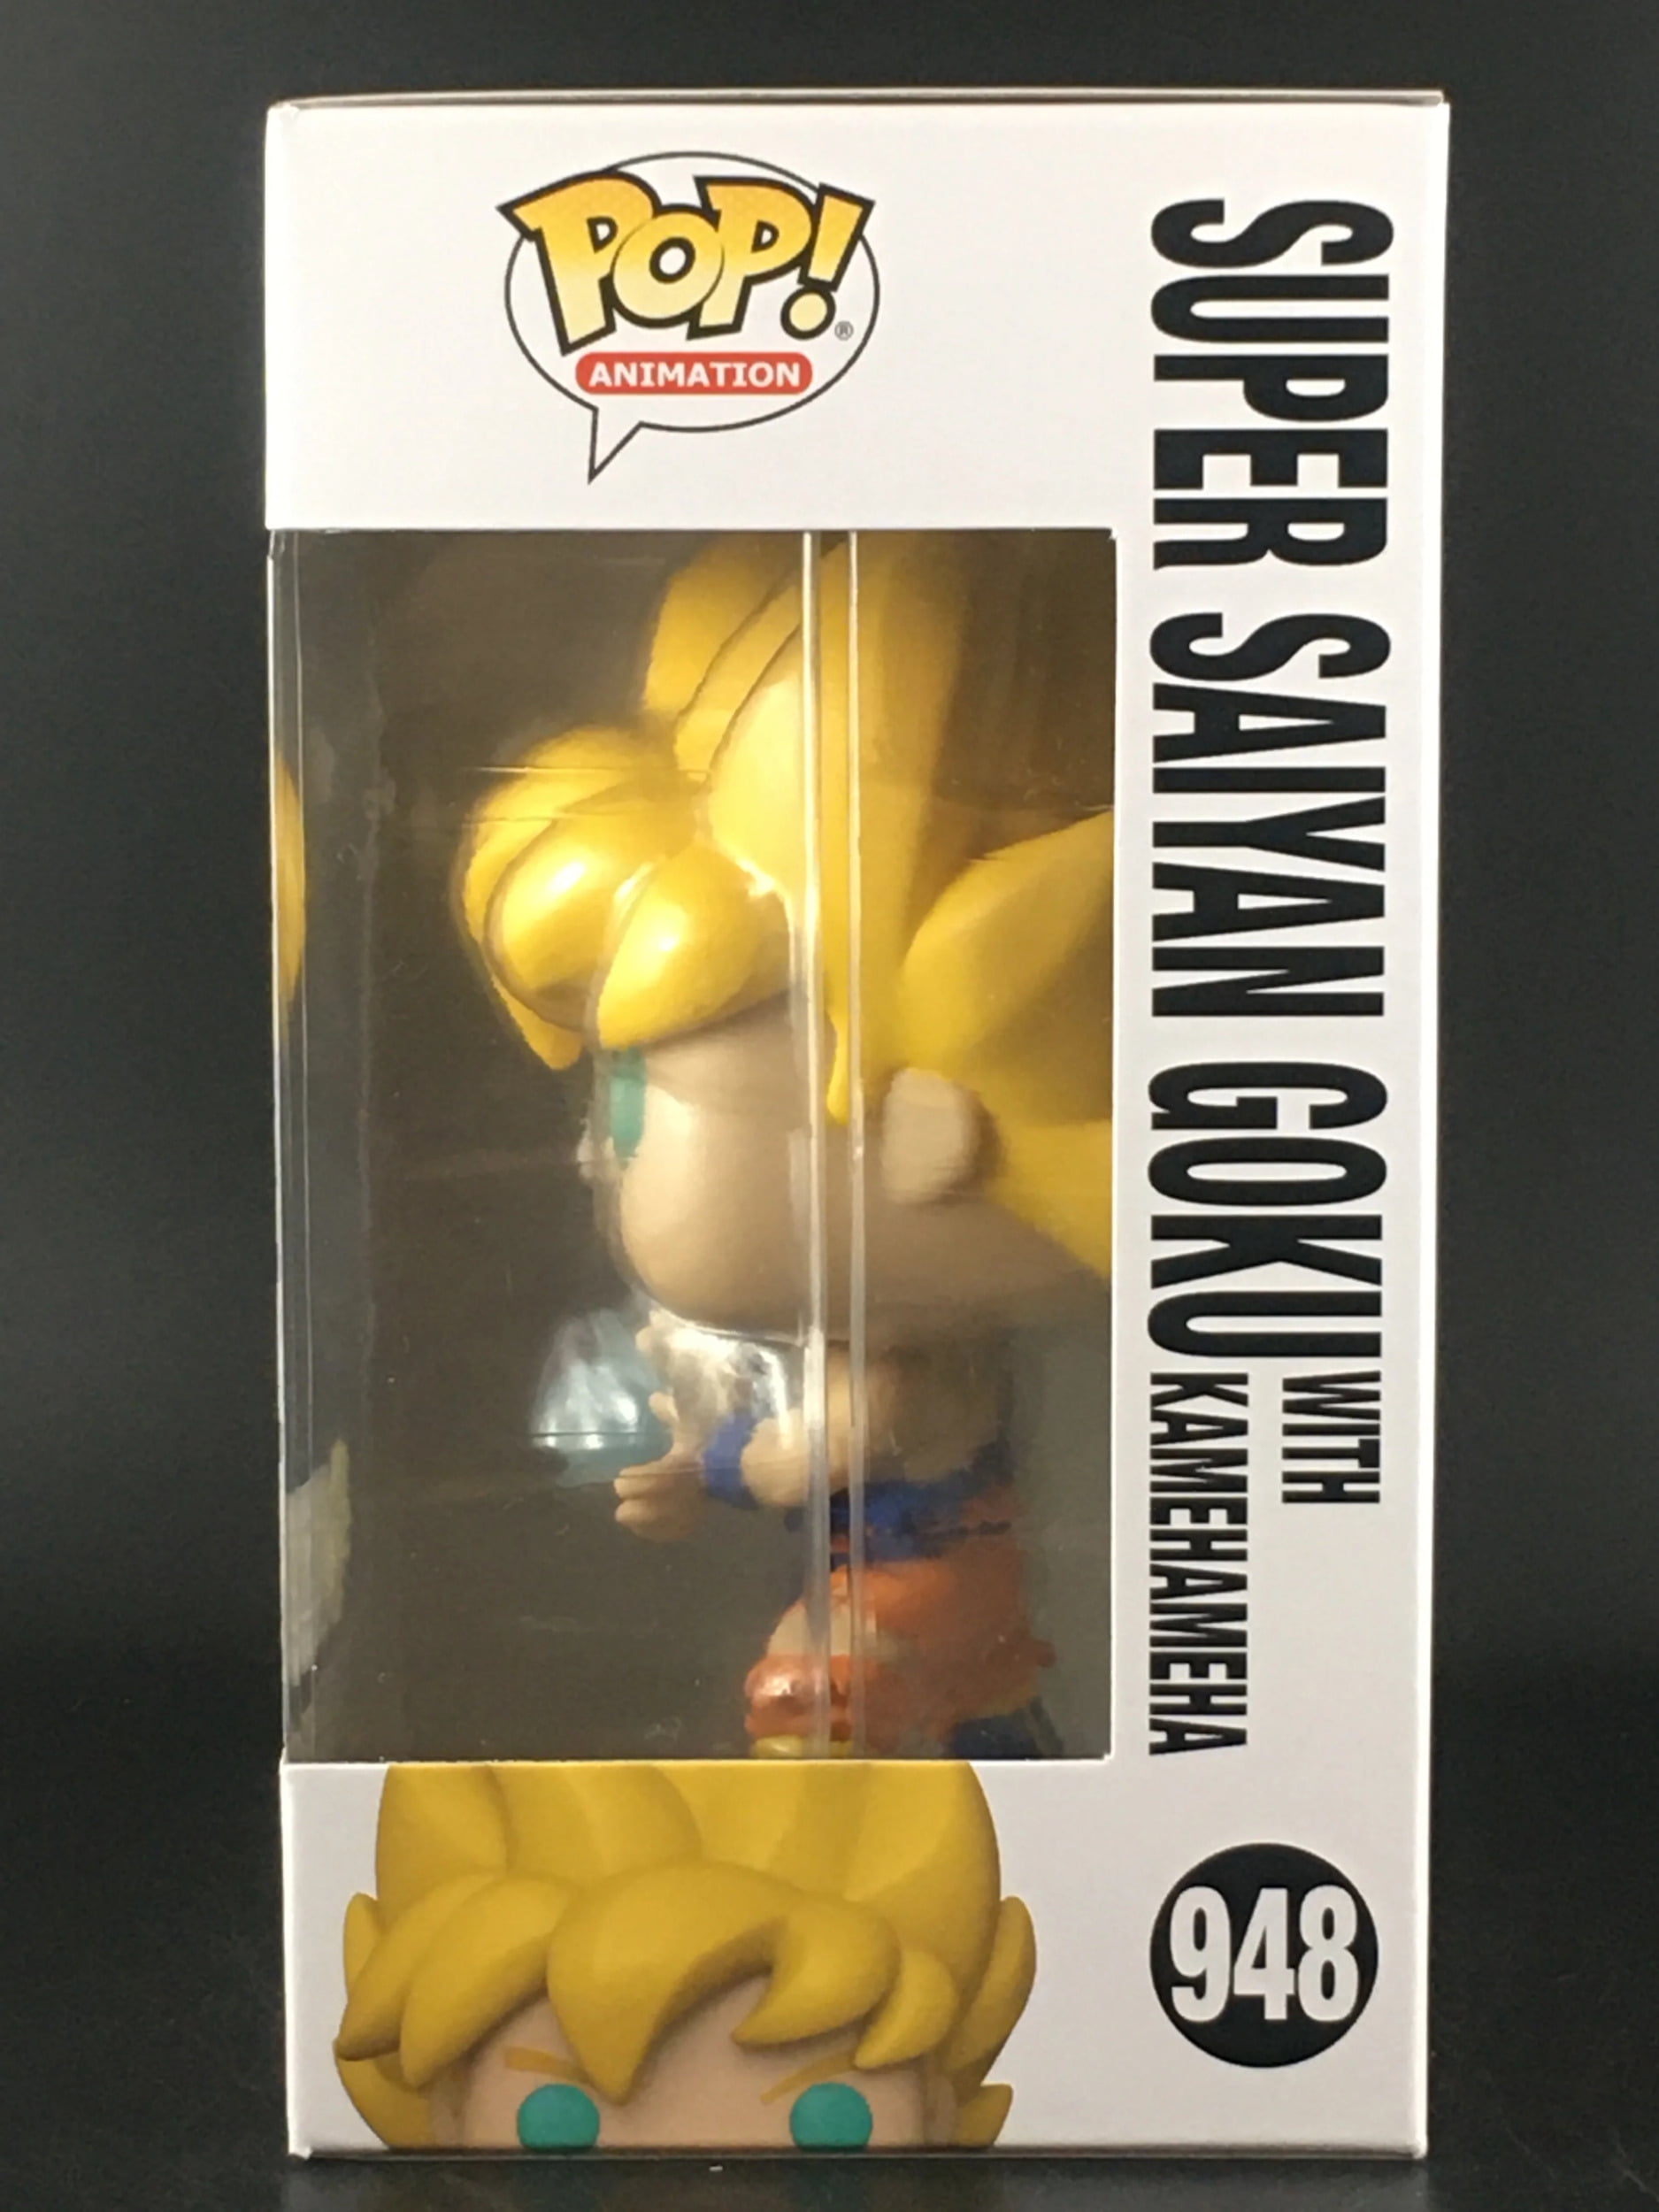 Super Saiyan Goku With Kamehameha (Diamond Collection) #948 Funko Pop!